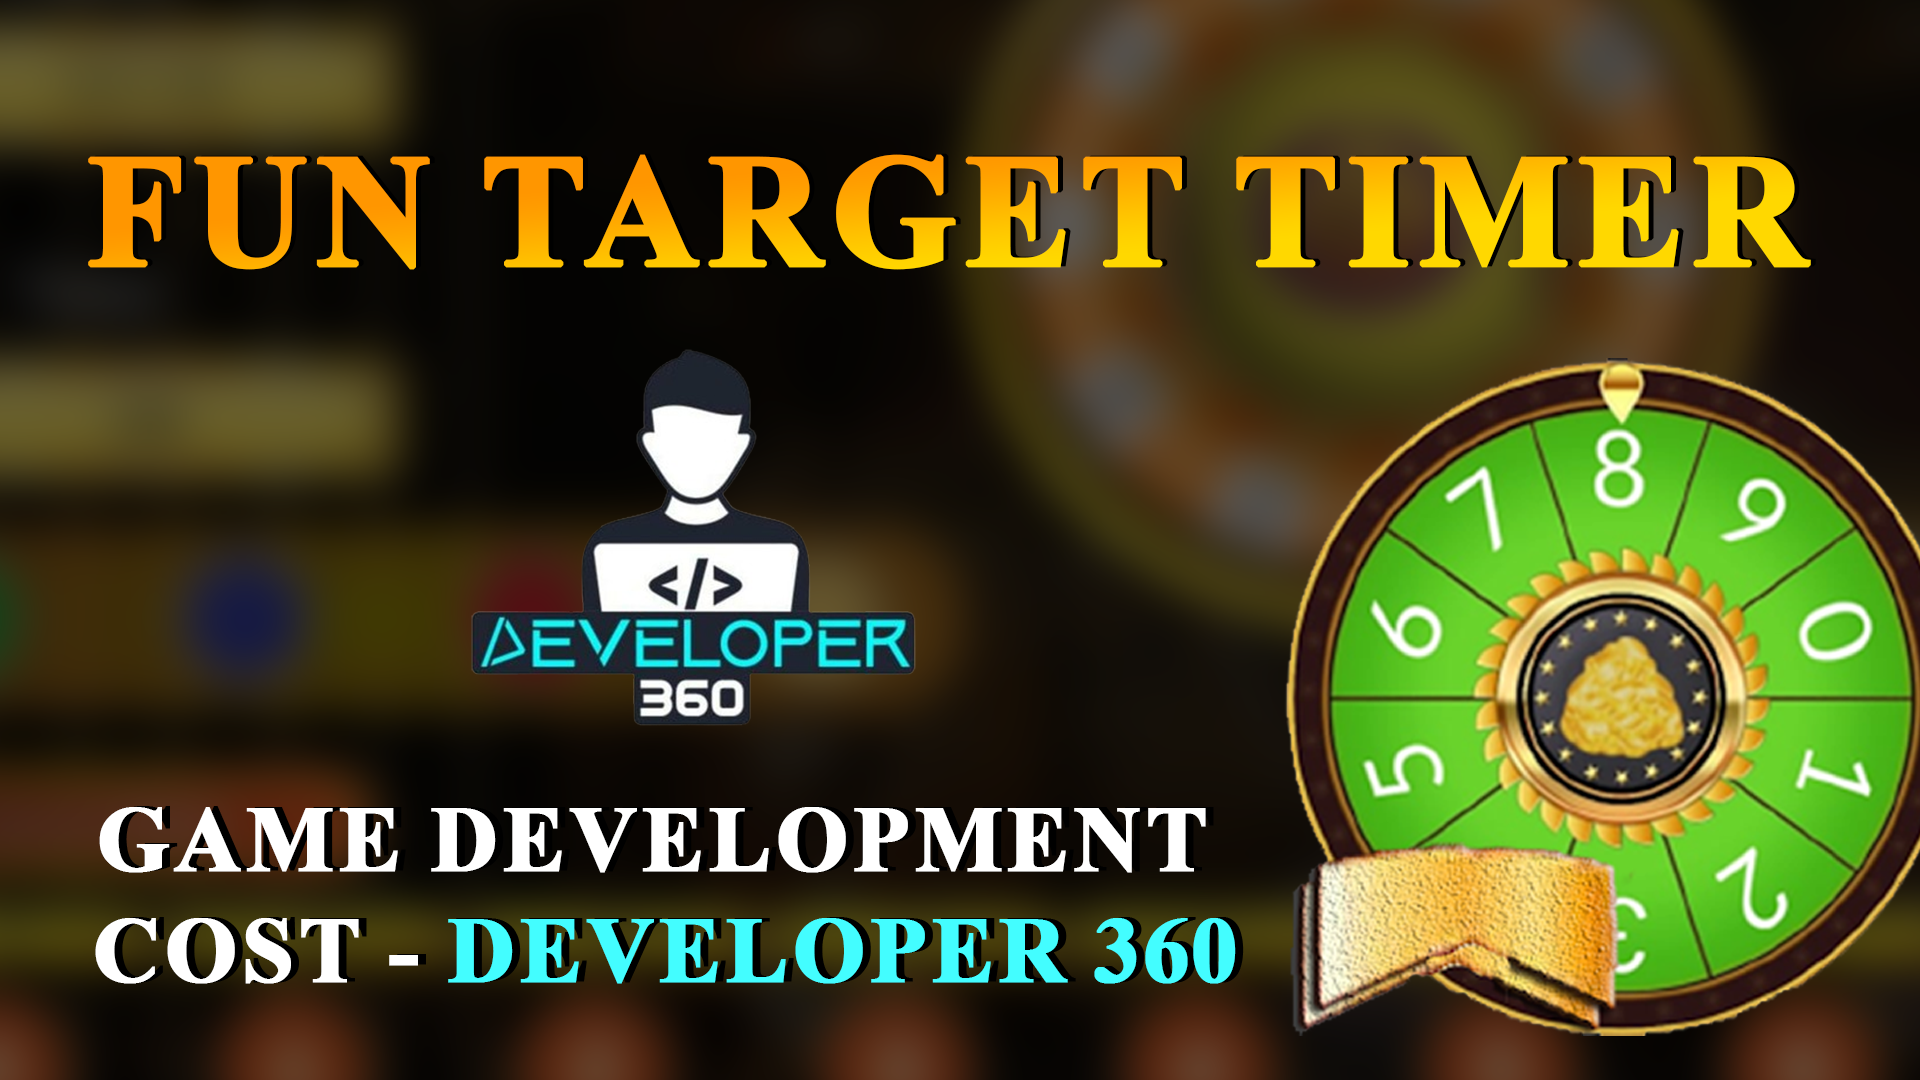 Fun Target Timer Game Development Cost - Developer 360